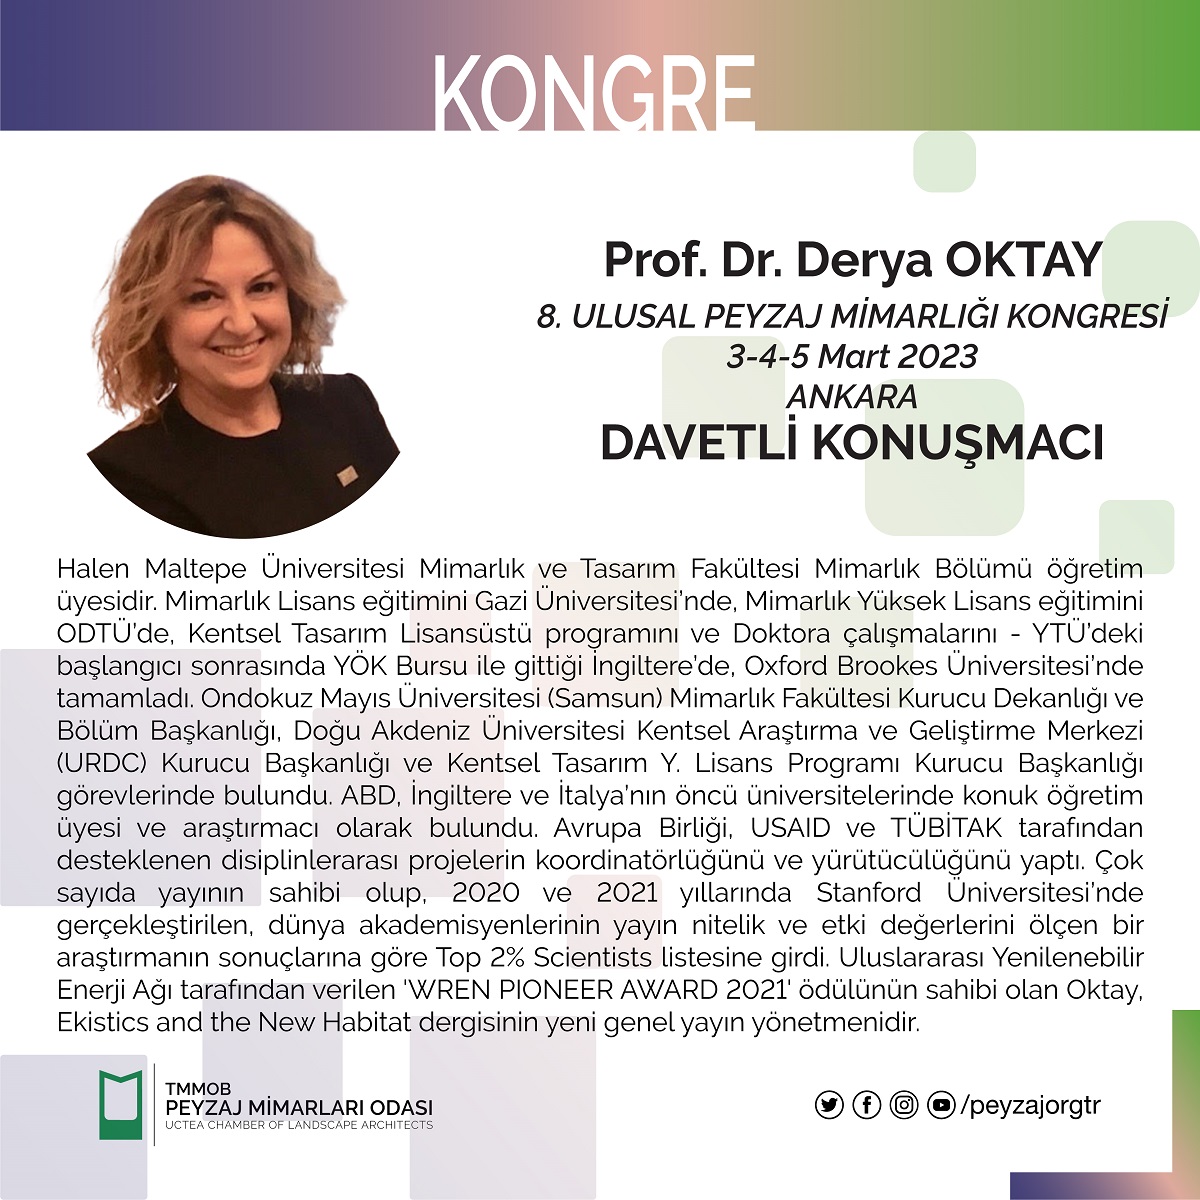 KONGRE | PROF. DR. DERYA OKTAY- DAVETLİ KONUŞMACI